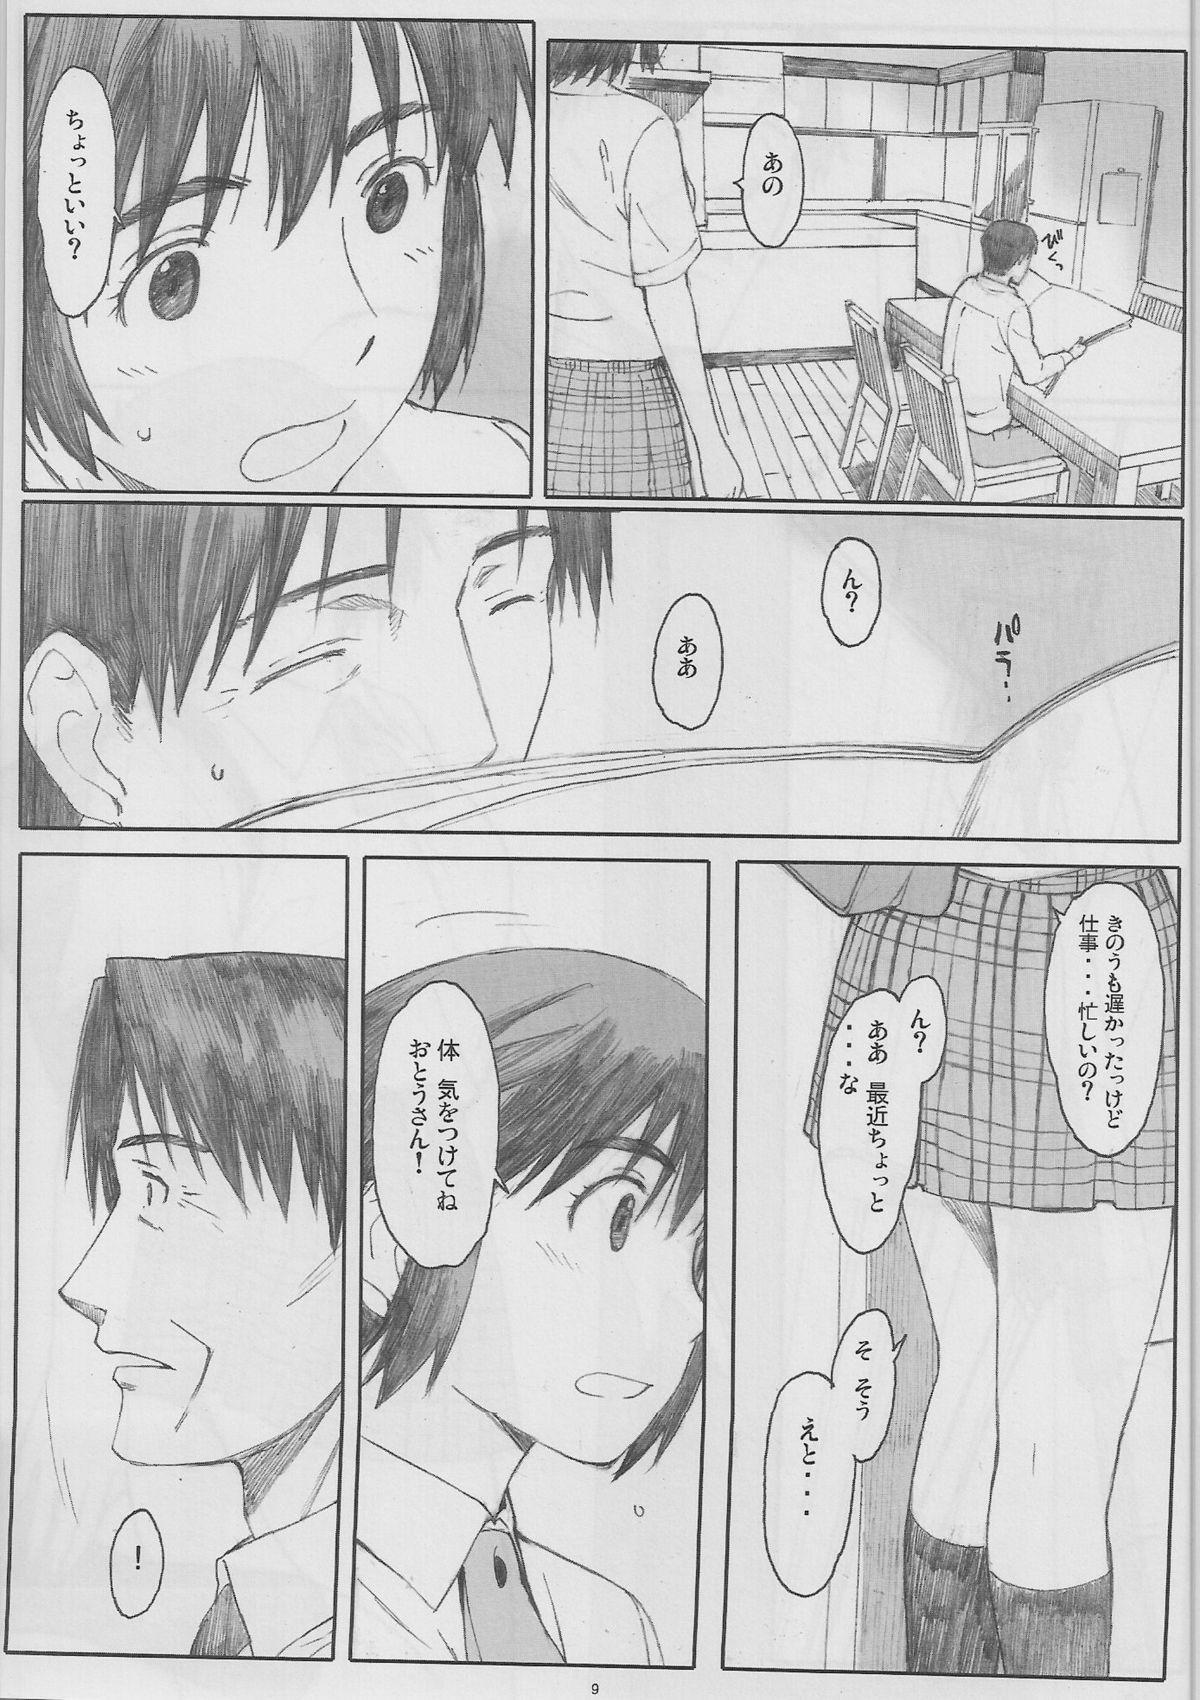 Realsex Natukaze! 6 - Yotsubato Action - Page 9